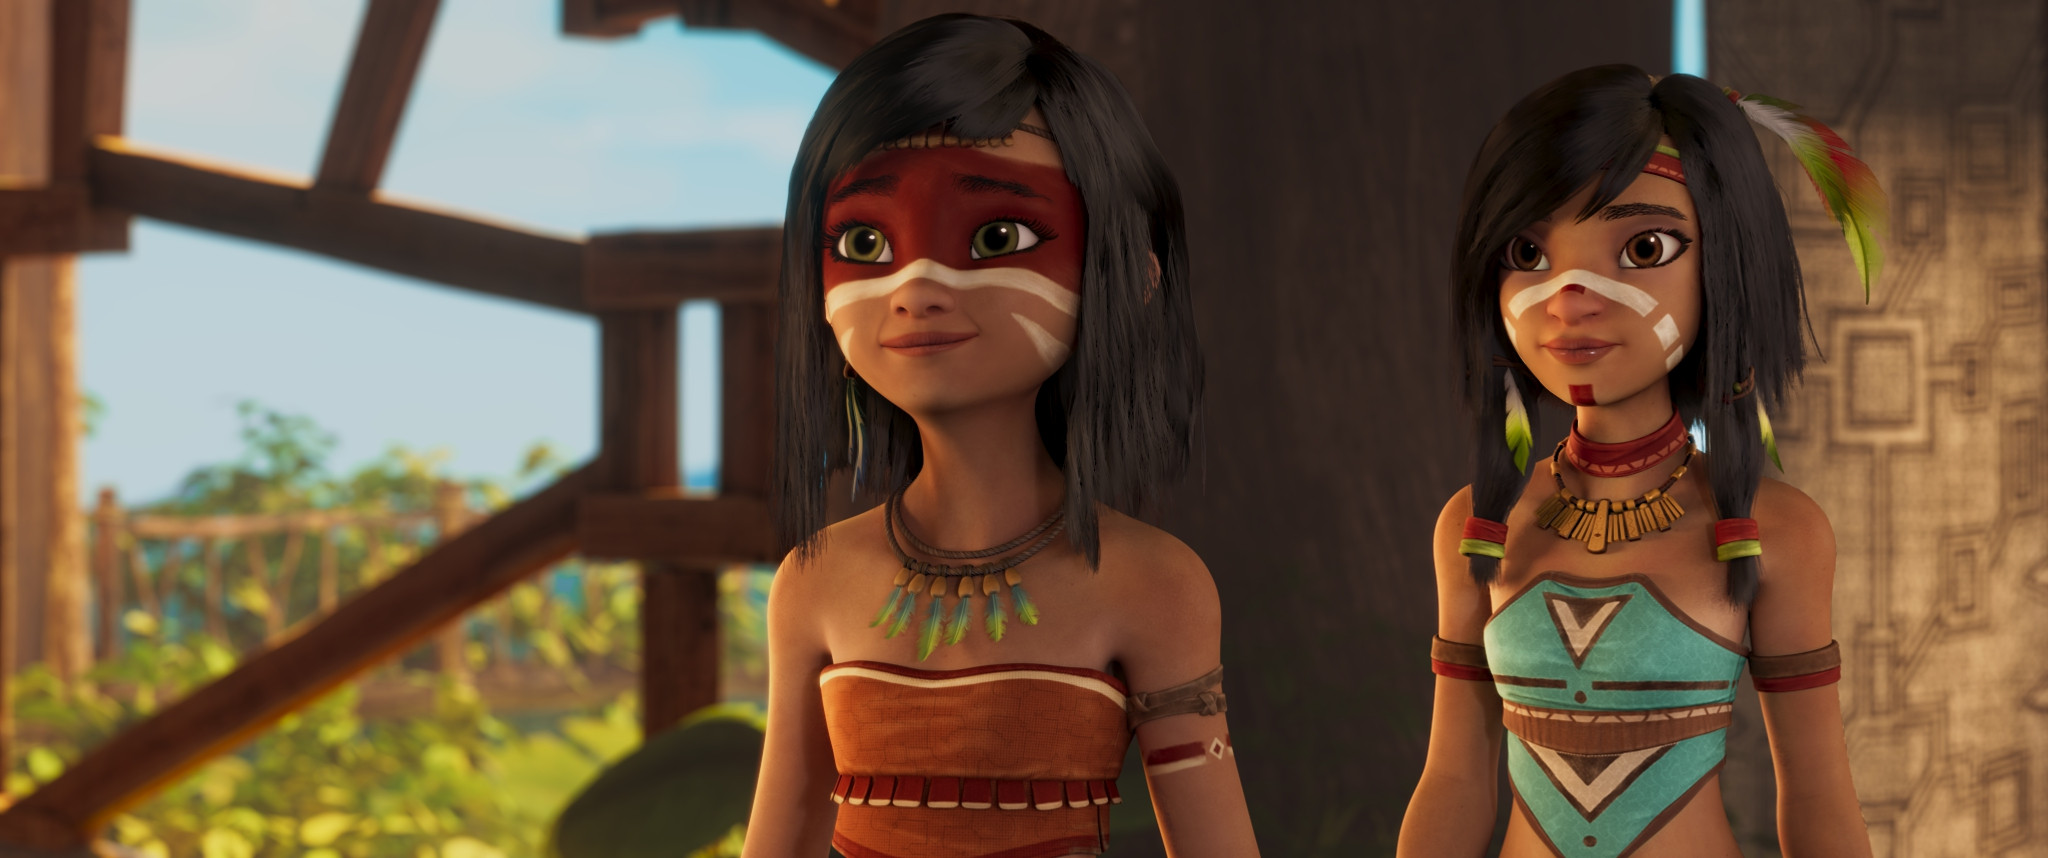 AINBO: Spirit of the Amazon: Scene Image 5